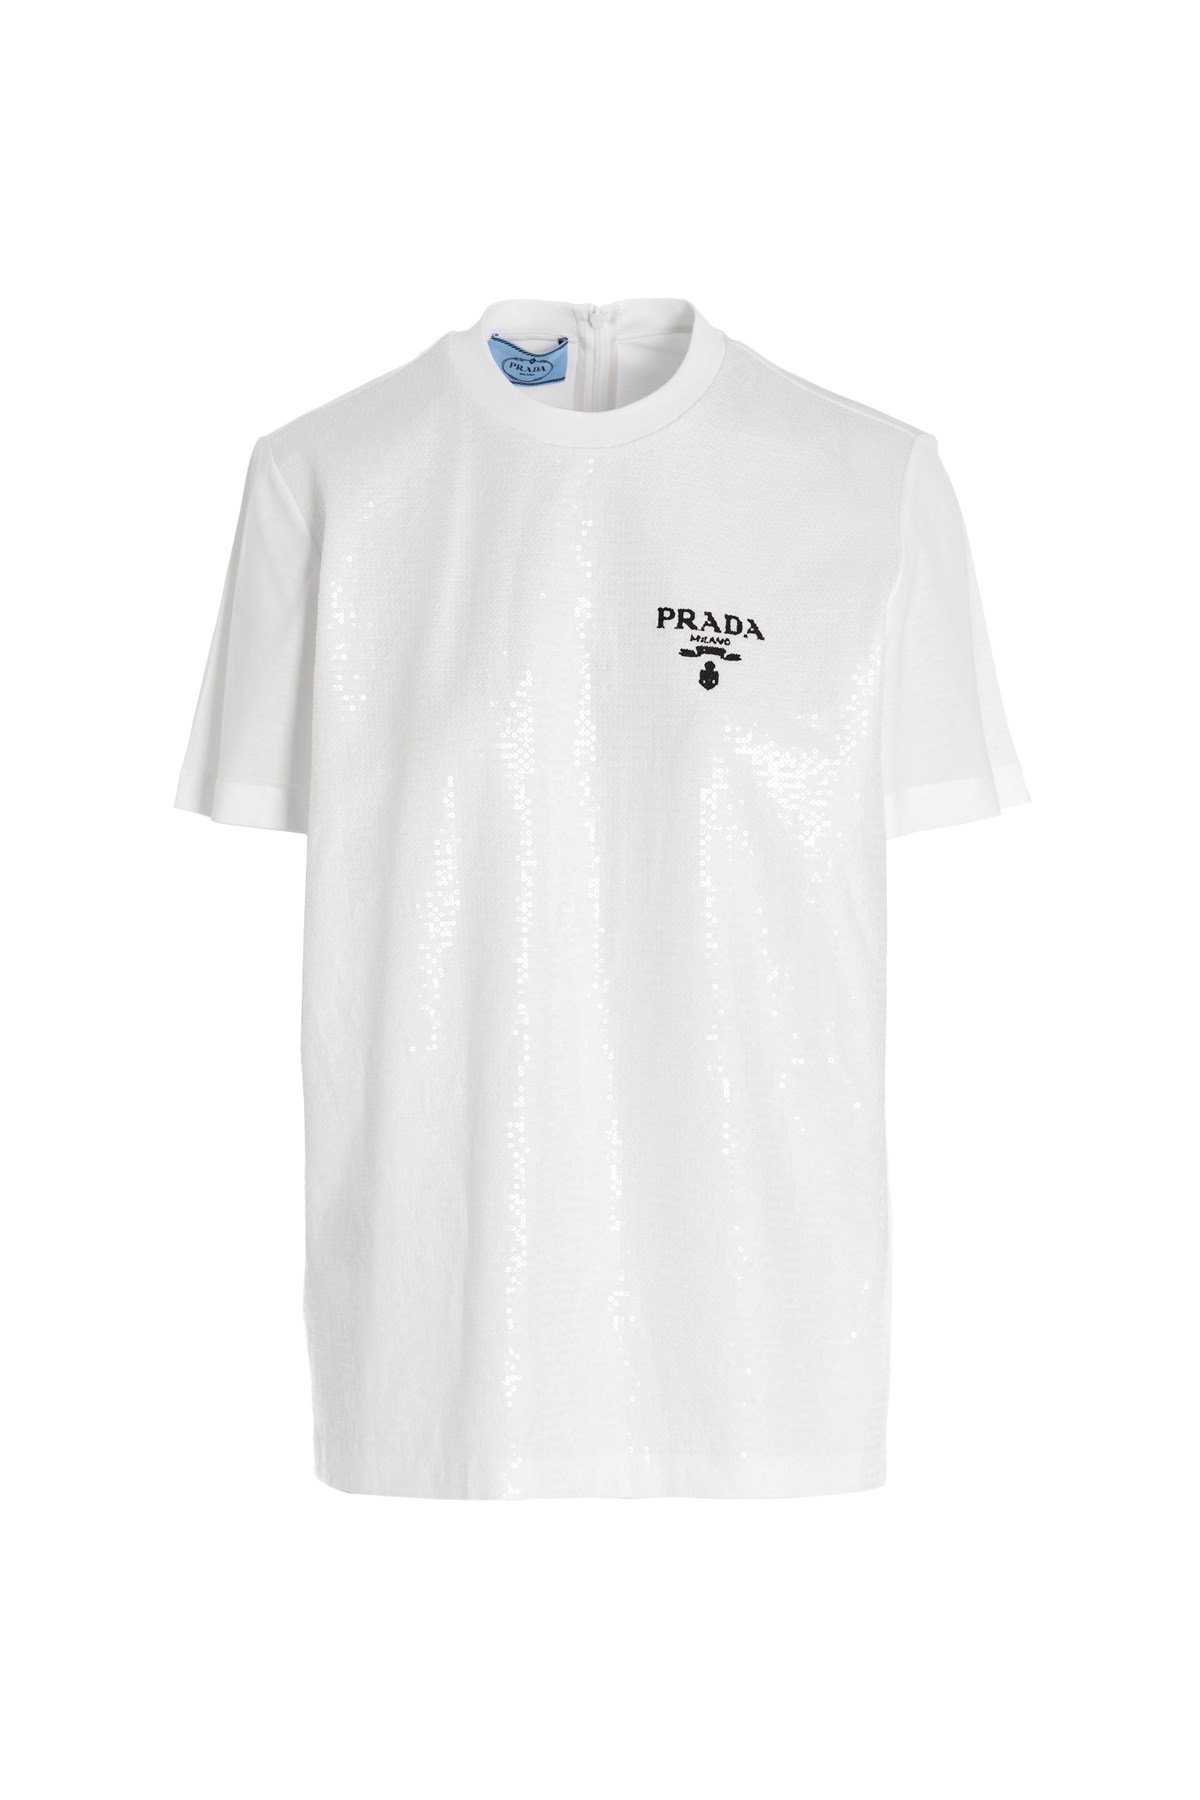 PRADA Sequin T-Shirt